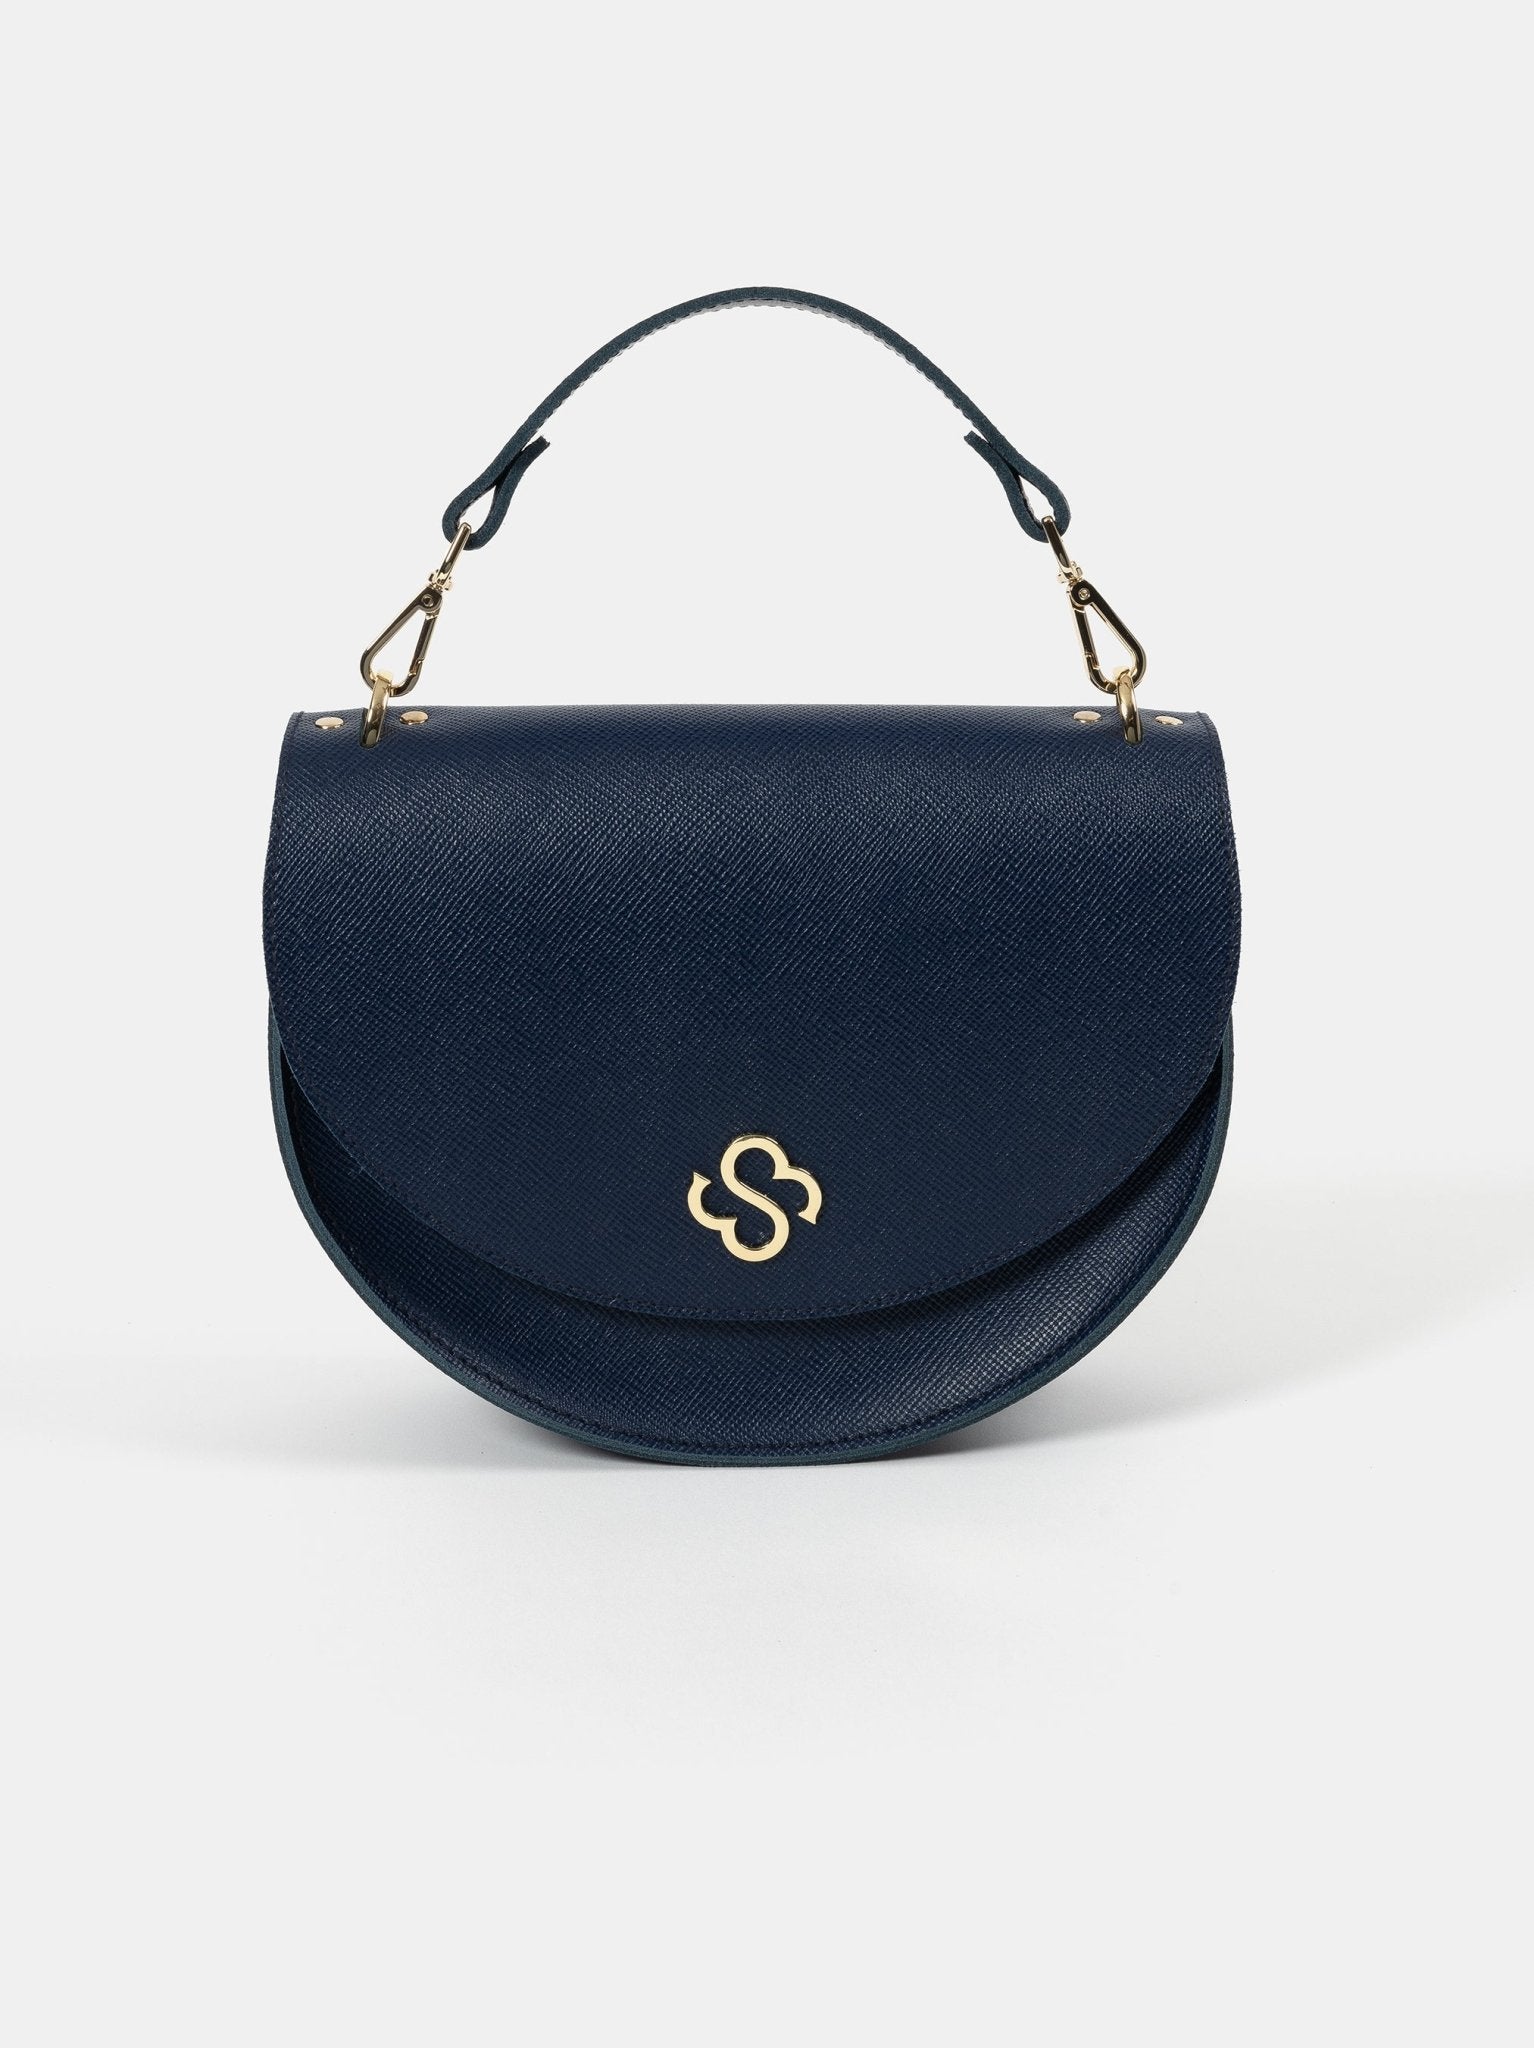 The Cambridge Satchel Co. Women's Handbag